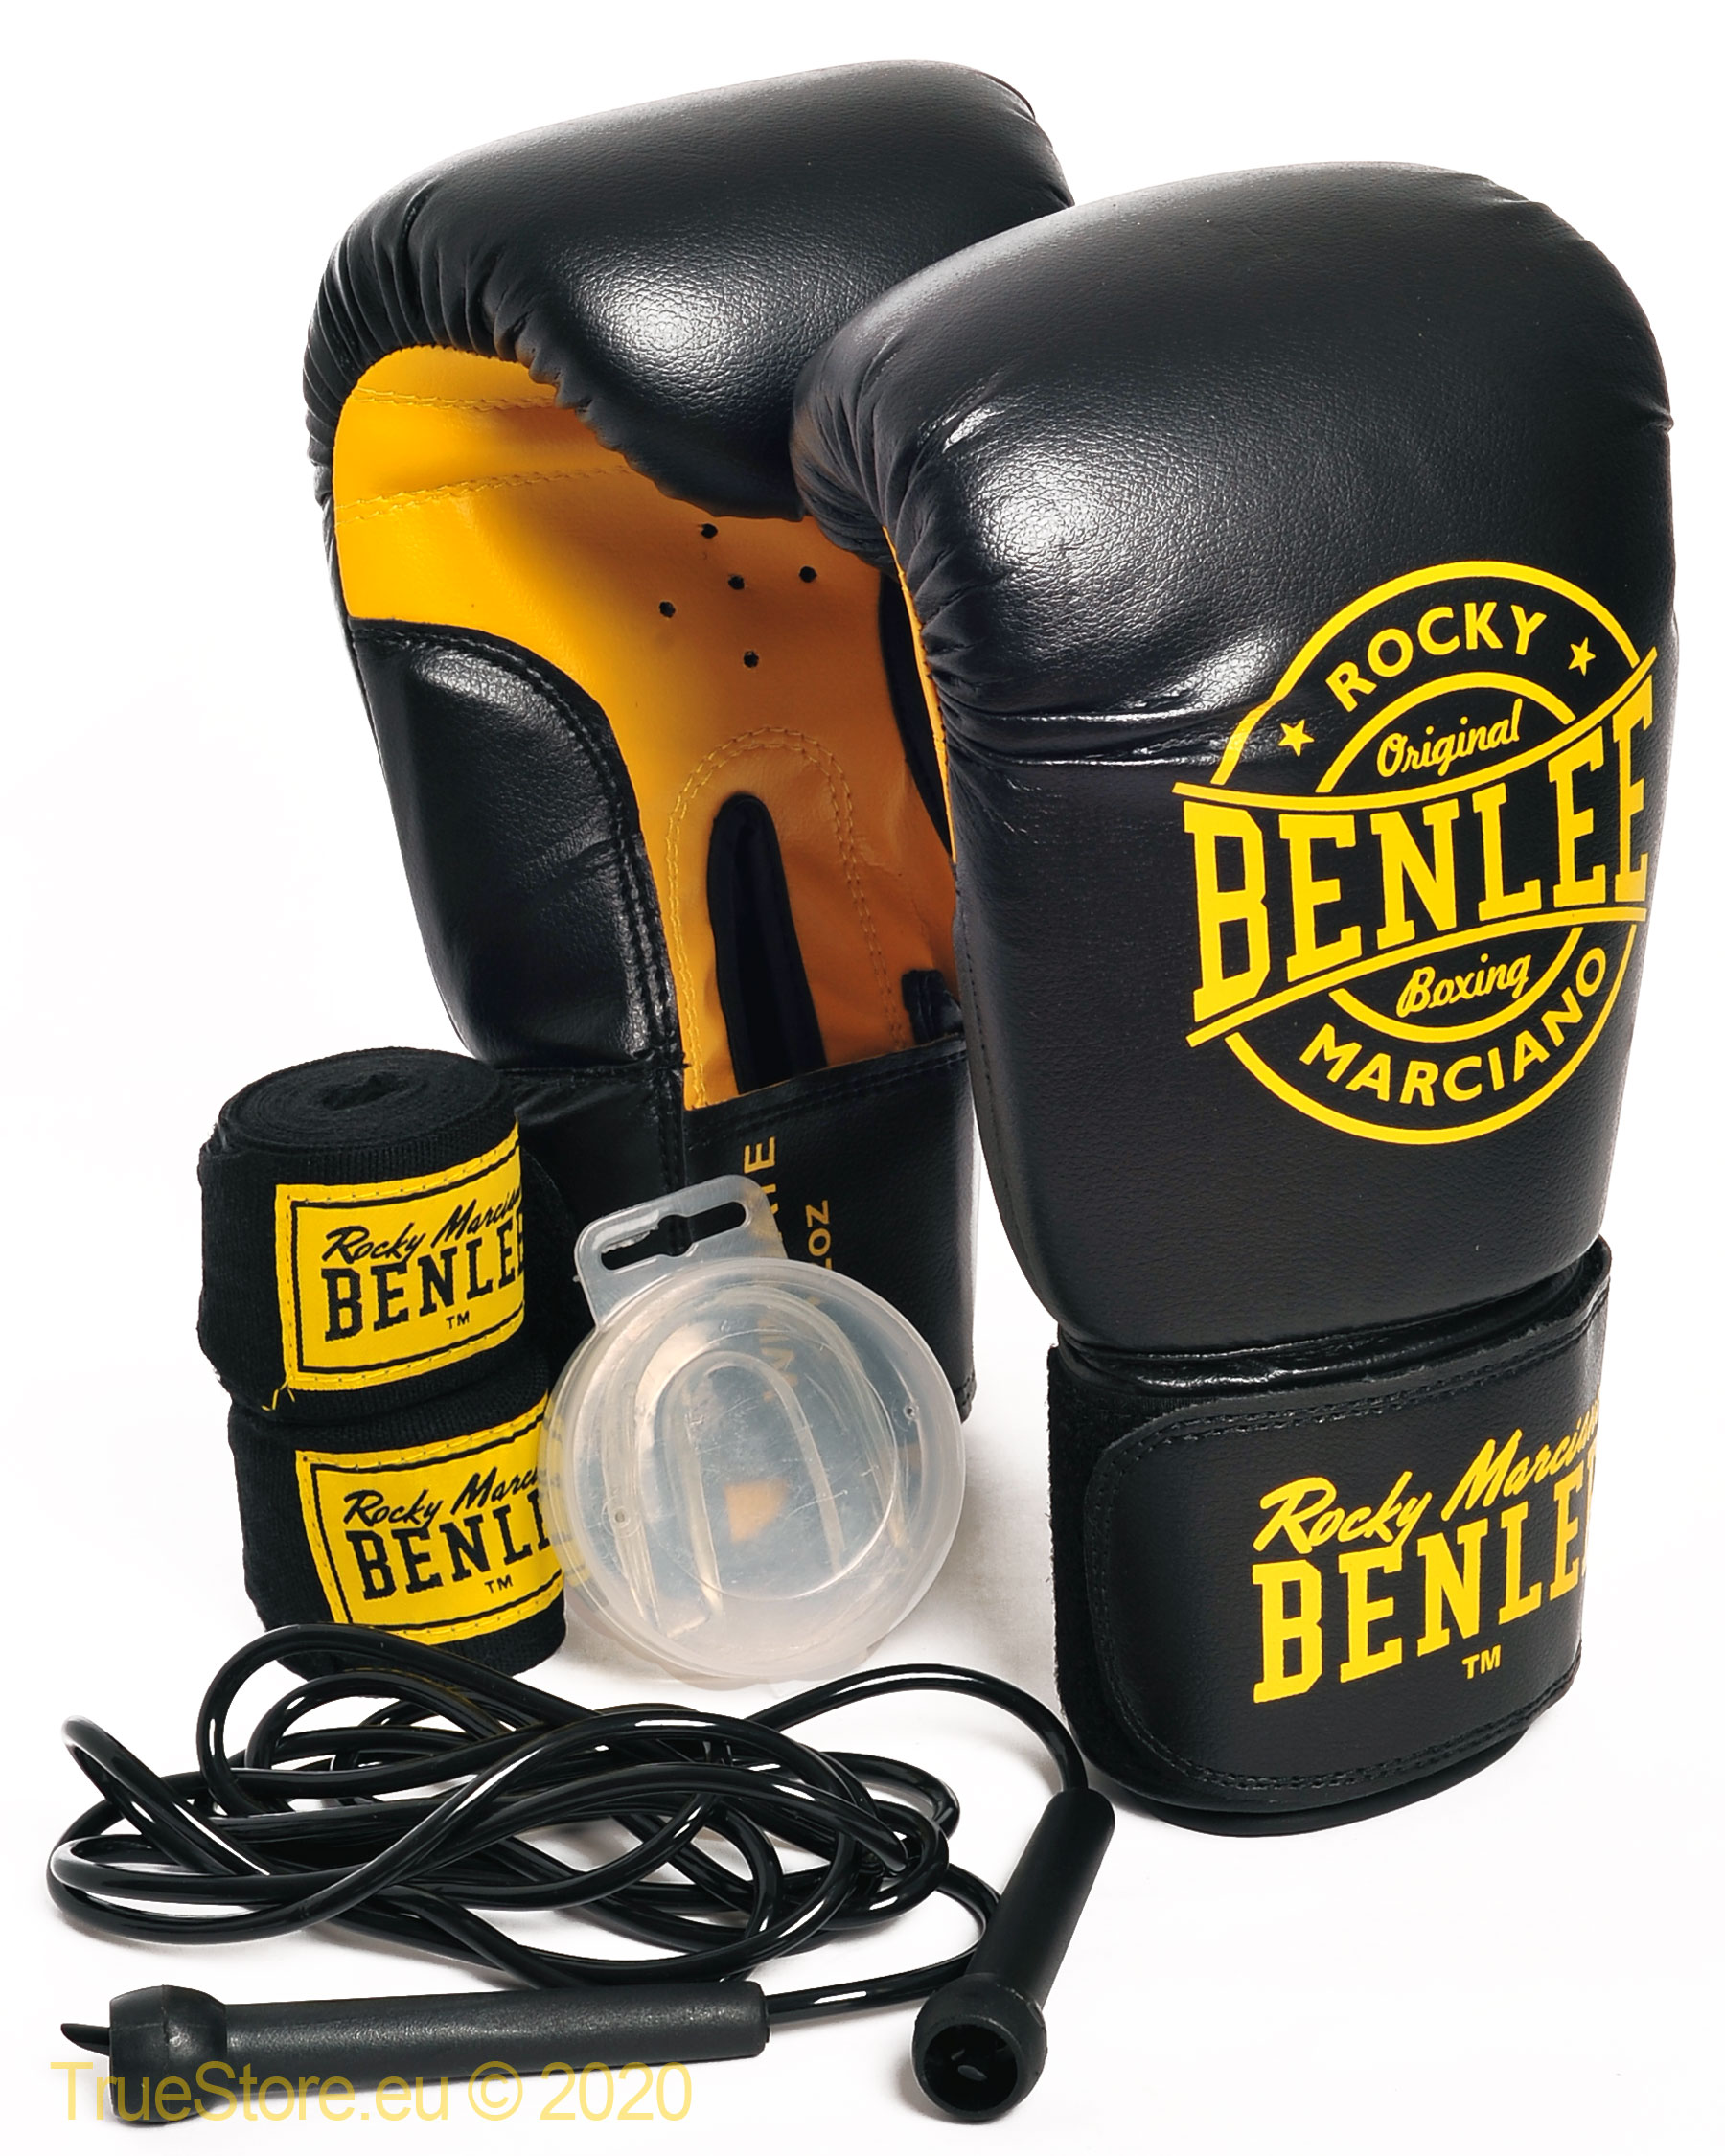 BENLEE Rocky Marciano boxma ntel Boxing Robe 